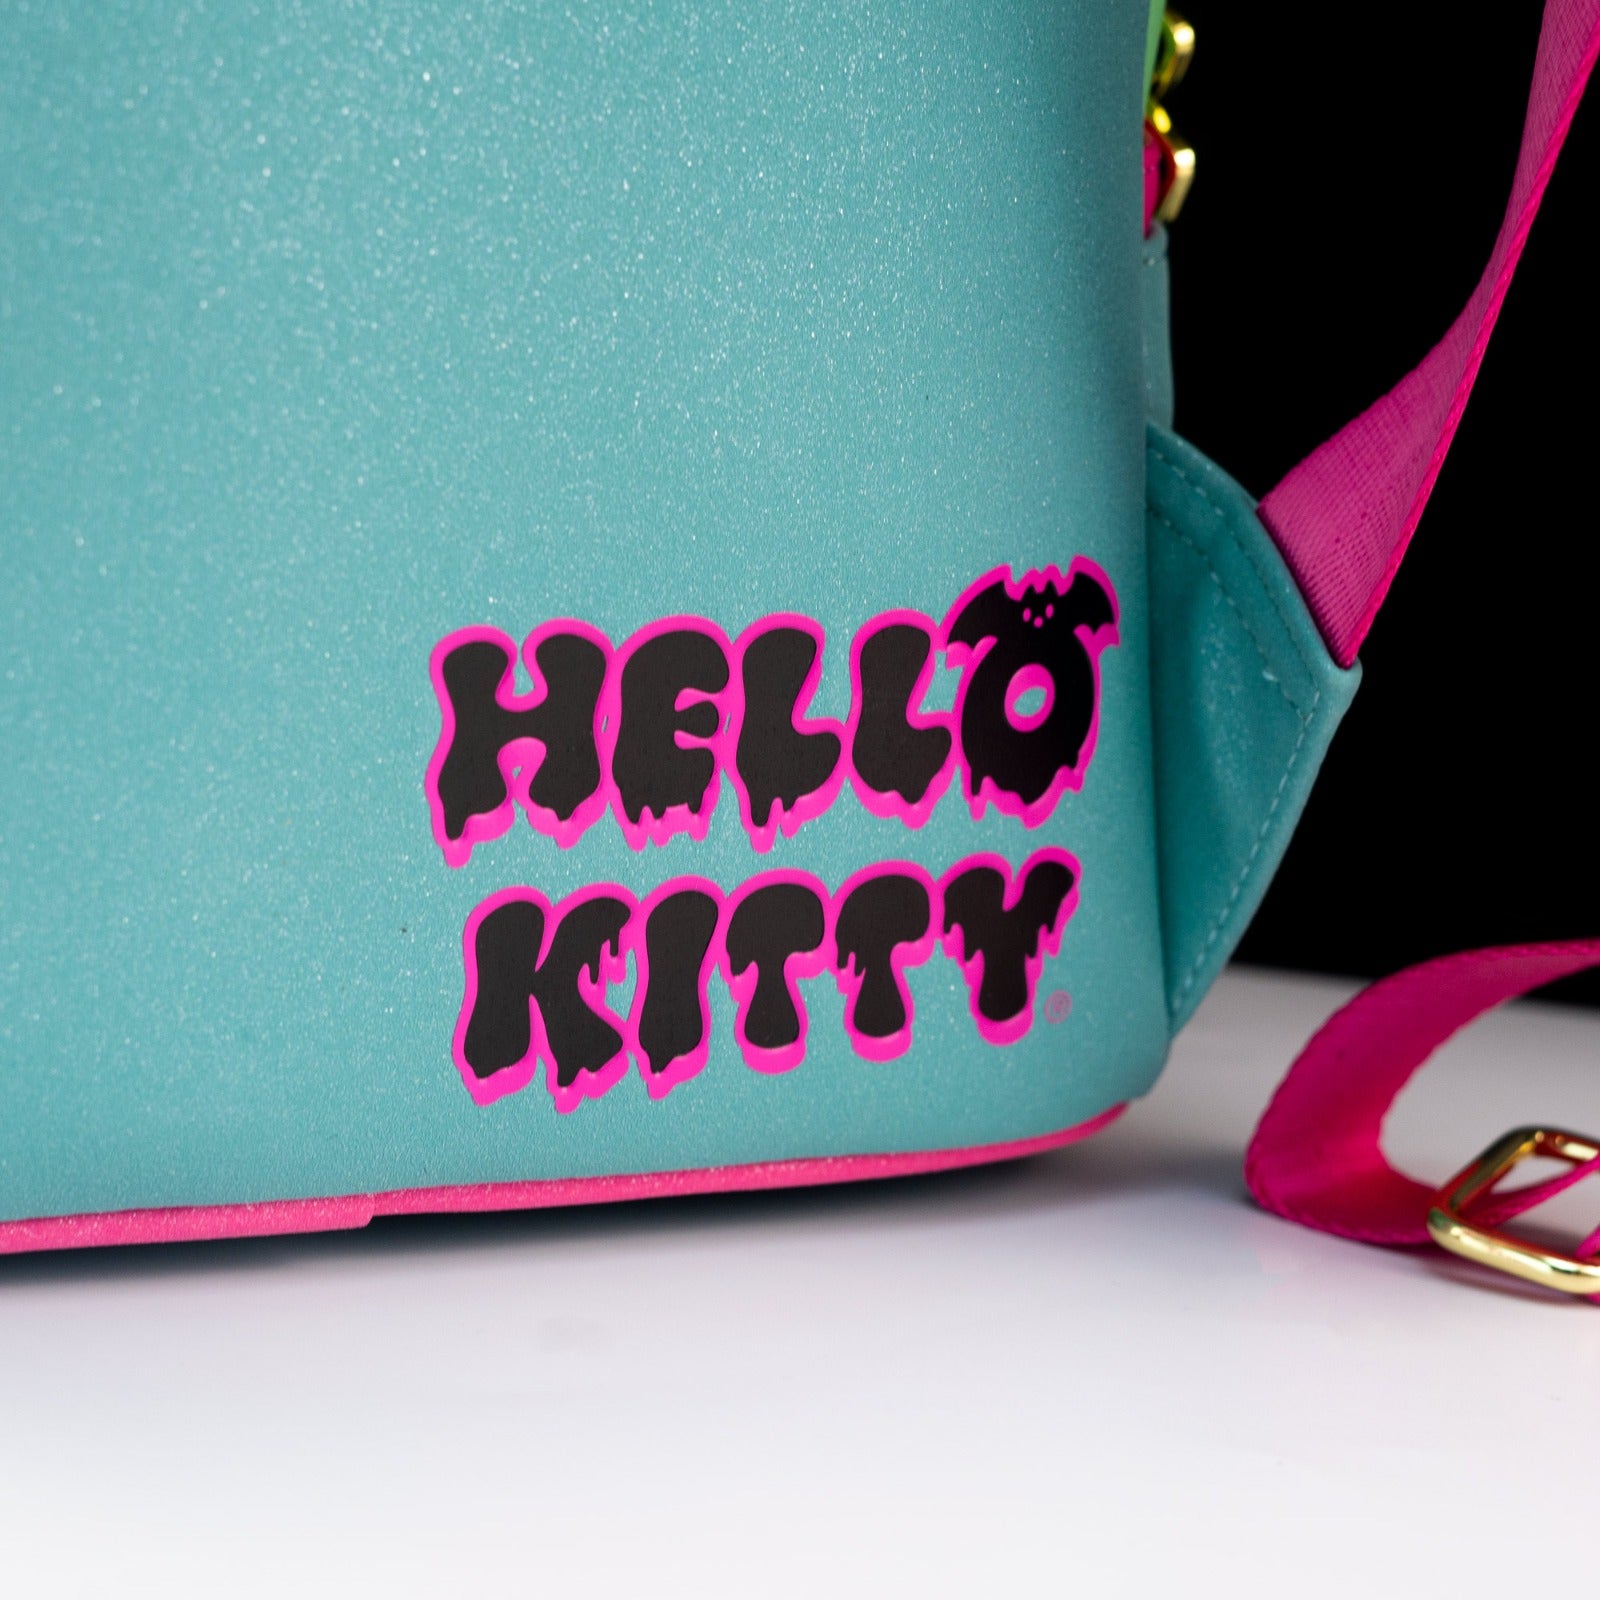 Loungefly x Sanrio Hello Kitty Zombie Pumpkin Cosplay Mini Backpack